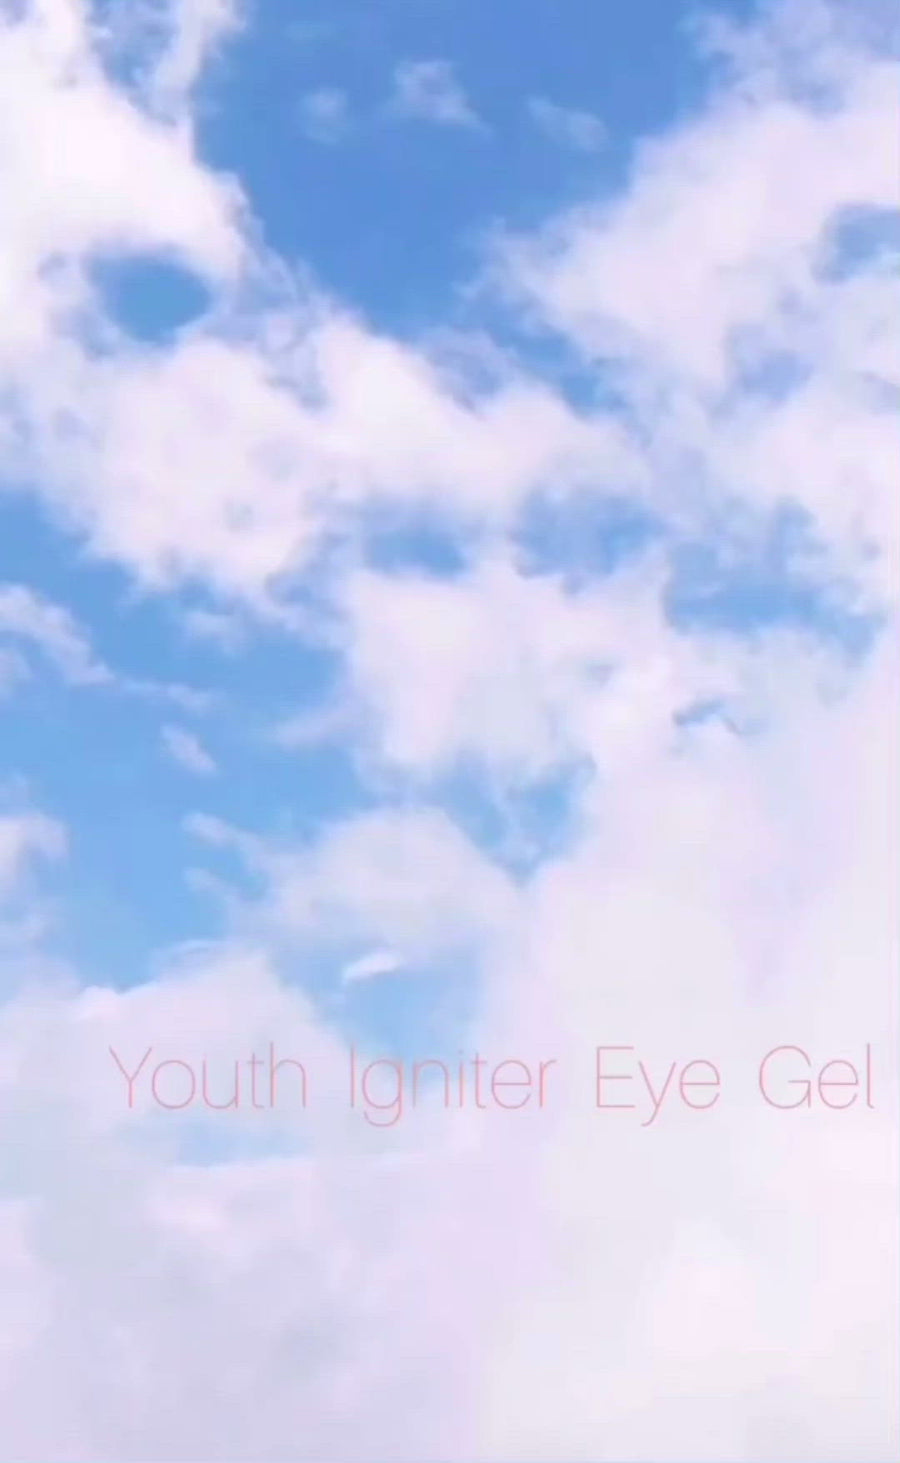 Youth Igniter Eye Gel with Turmeric, Cucumber, and Aloe Vera